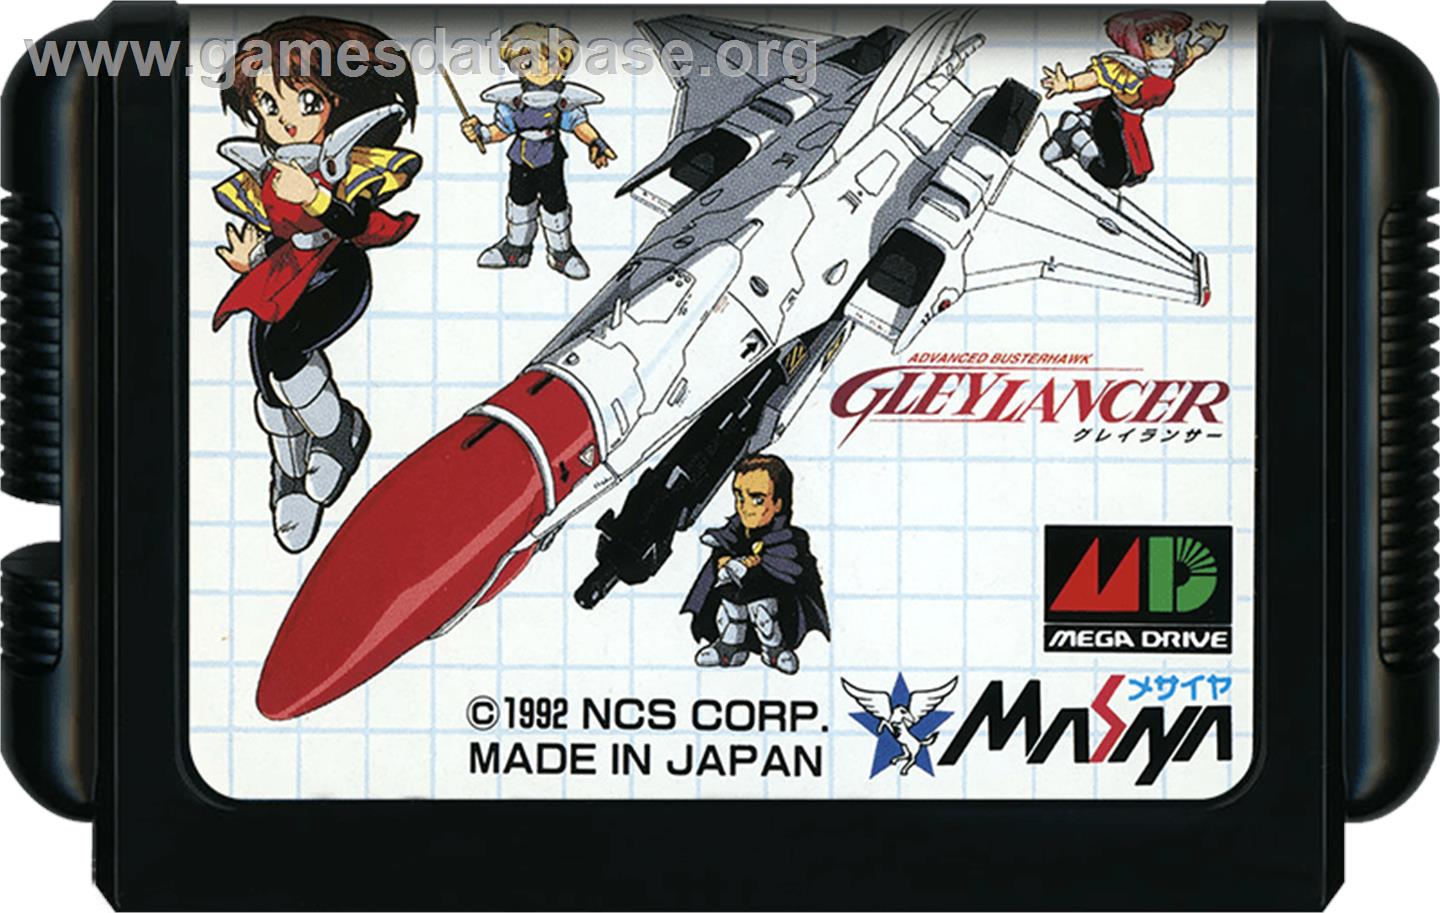 Advanced Busterhawk Gleylancer - Sega Genesis - Artwork - Cartridge